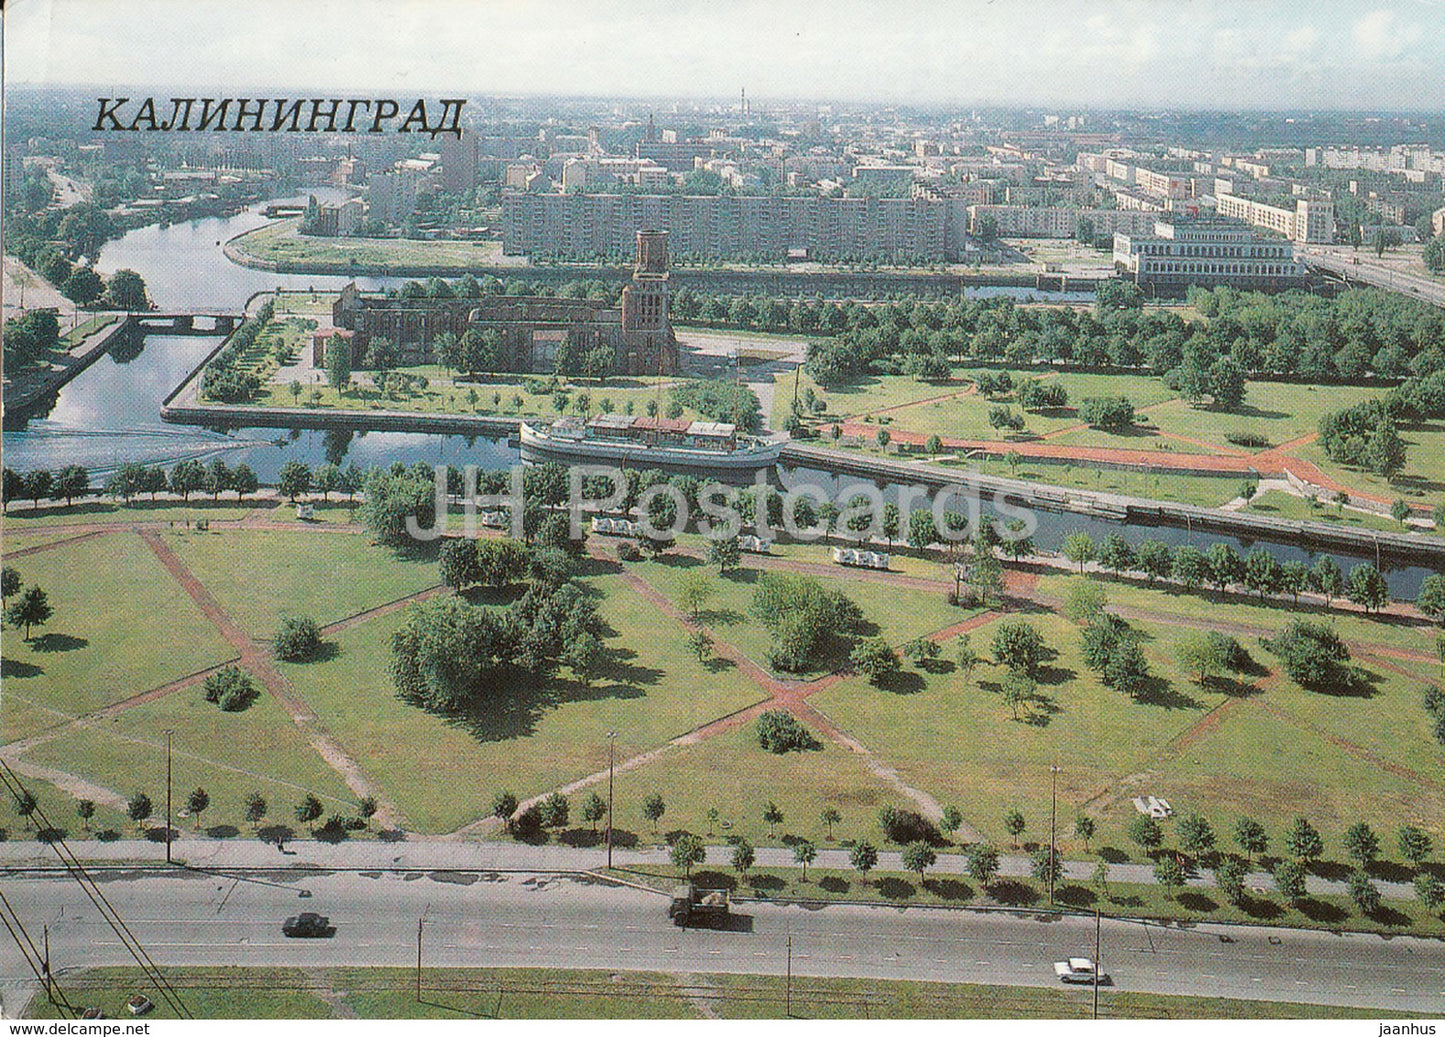 Kaliningrad - Konigsberg - View of the City - Pregolya river - 1987 - Russia USSR - unused - JH Postcards